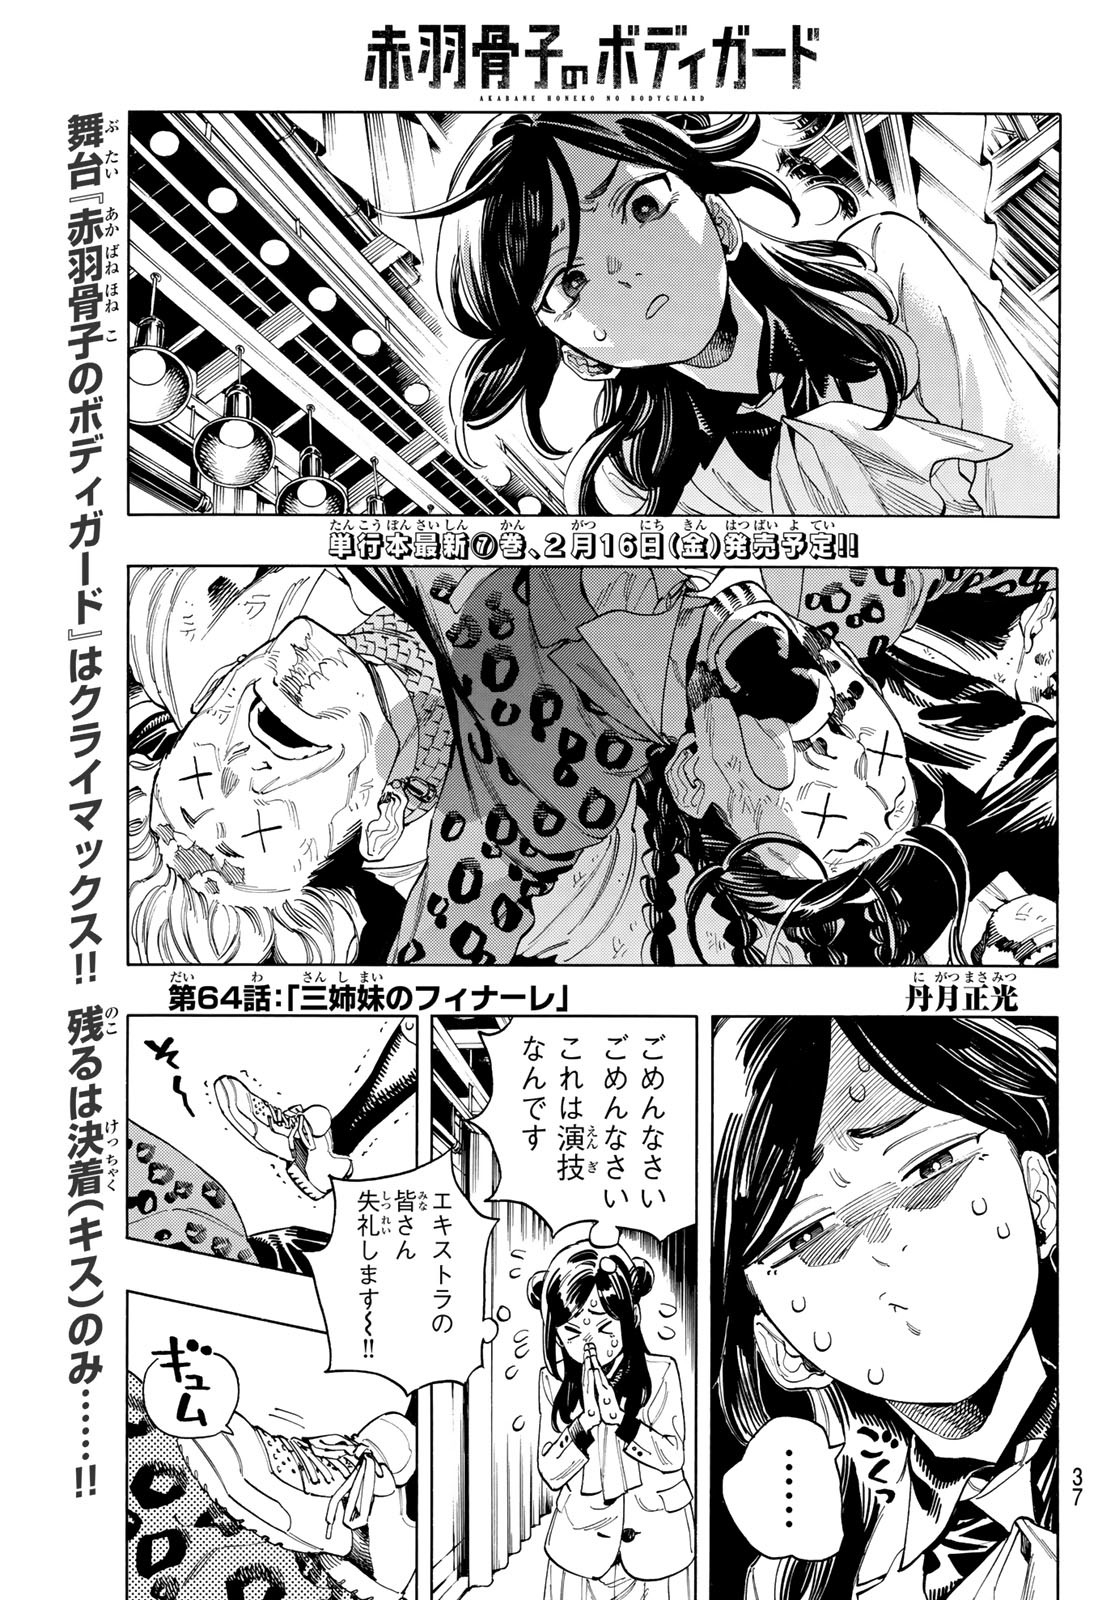 Akabane Honeko no Bodyguard - Chapter 64 - Page 1